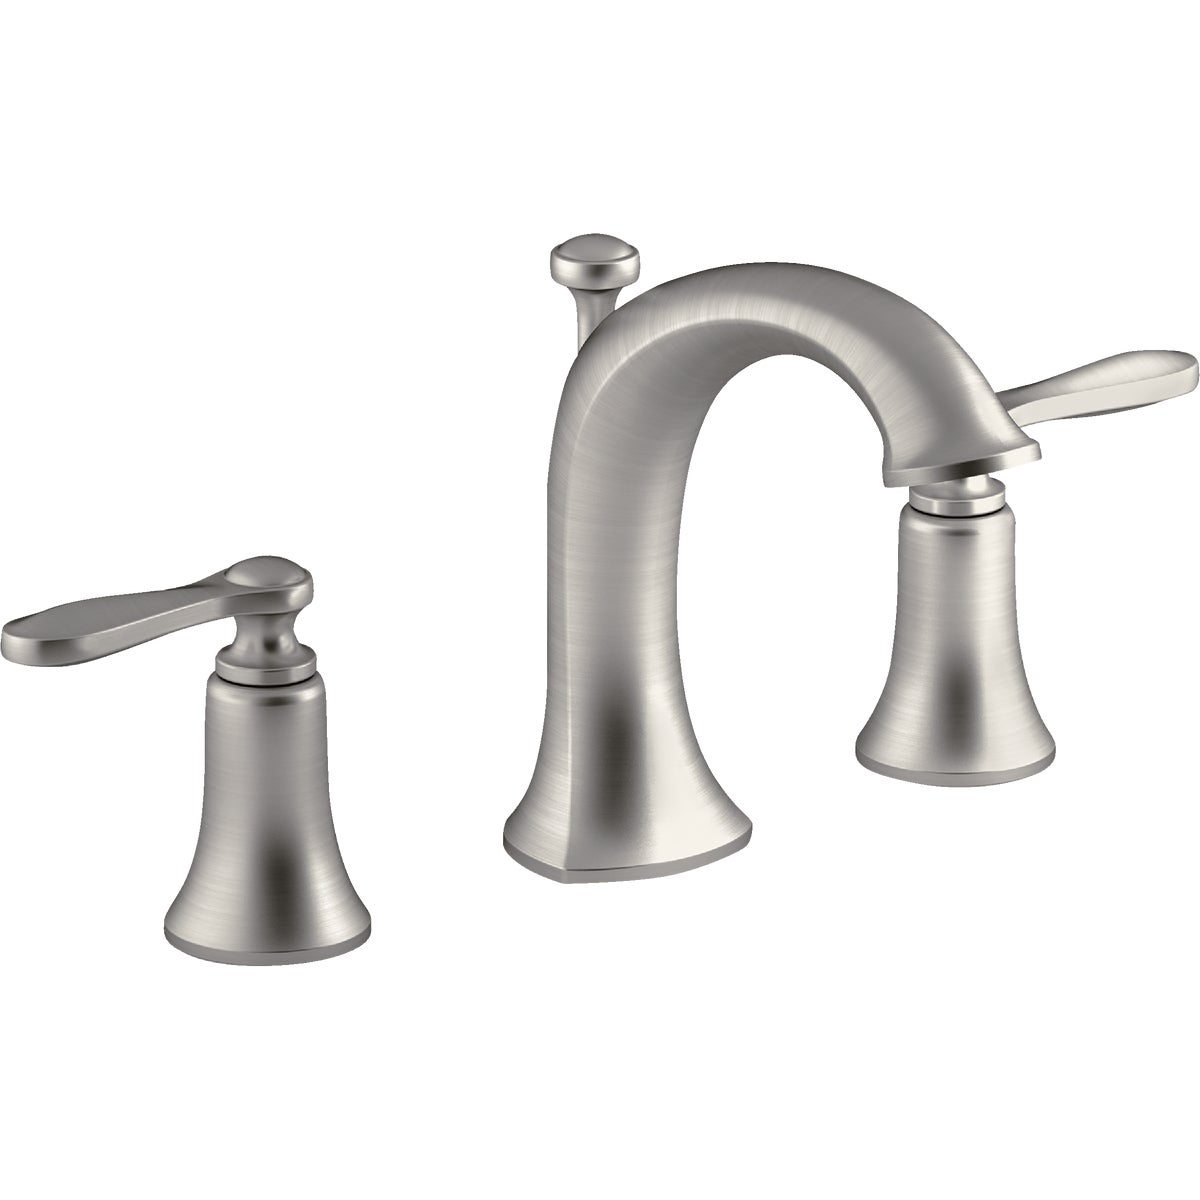 Kohler Linwood Brushed Nickel 2-Handle Lever 8 In. Widespread Bathroom Faucet with Pop-Up